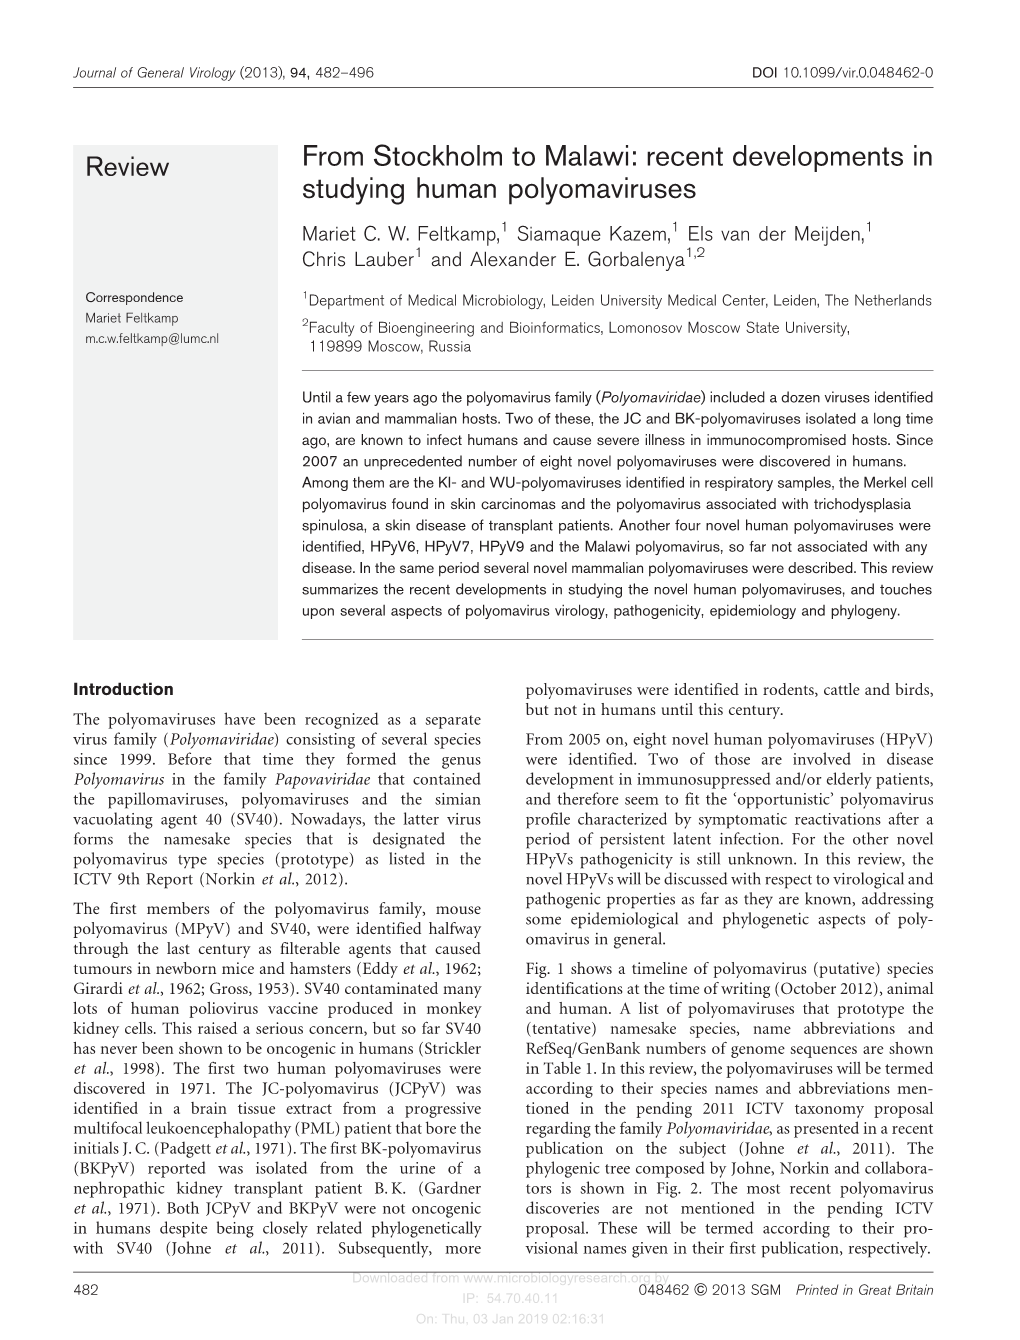 Recent Developments in Studying Human Polyomaviruses